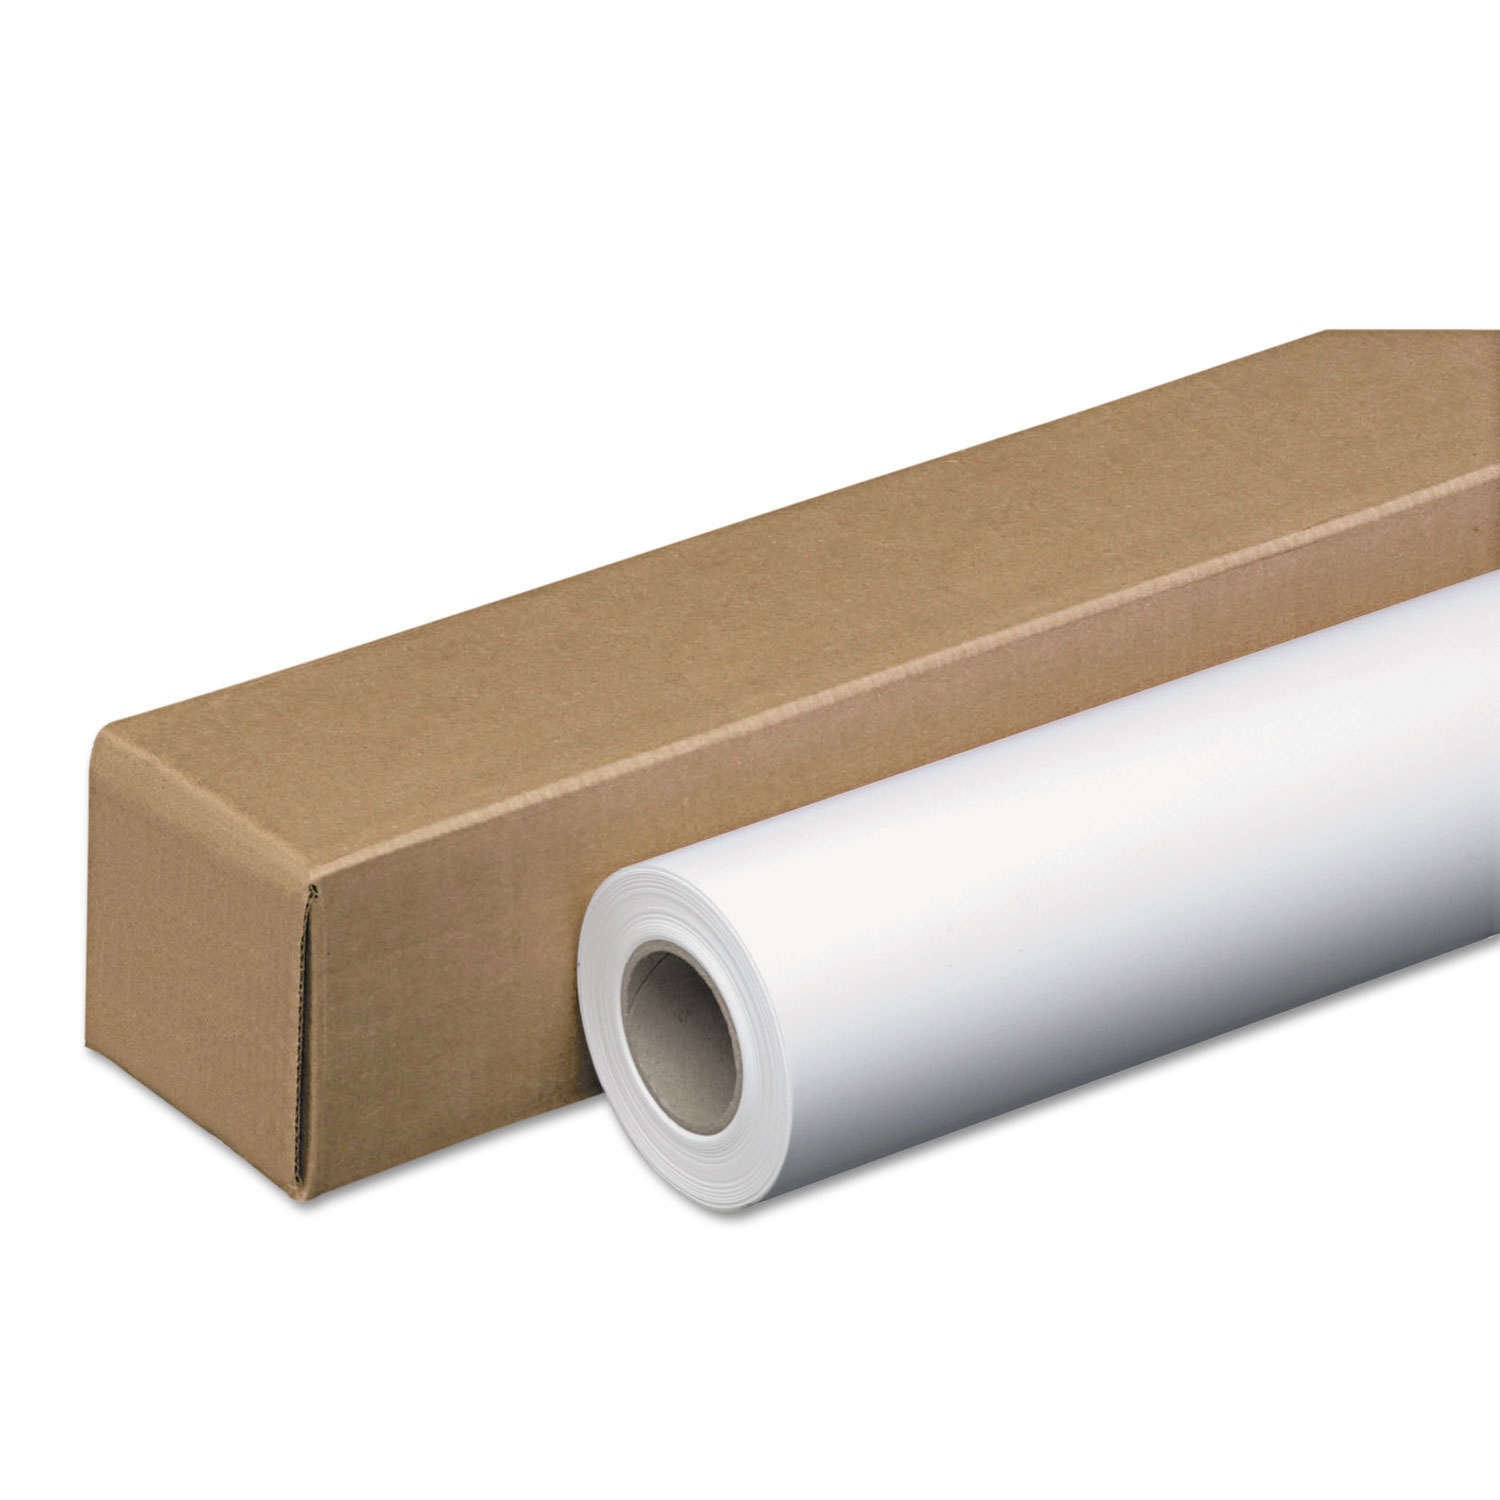  Iconex 45142 Amerigo Wide-Format Paper, 2 Core, 24 lb, 42 x 150 ft, Coated White (ICX90750209) 